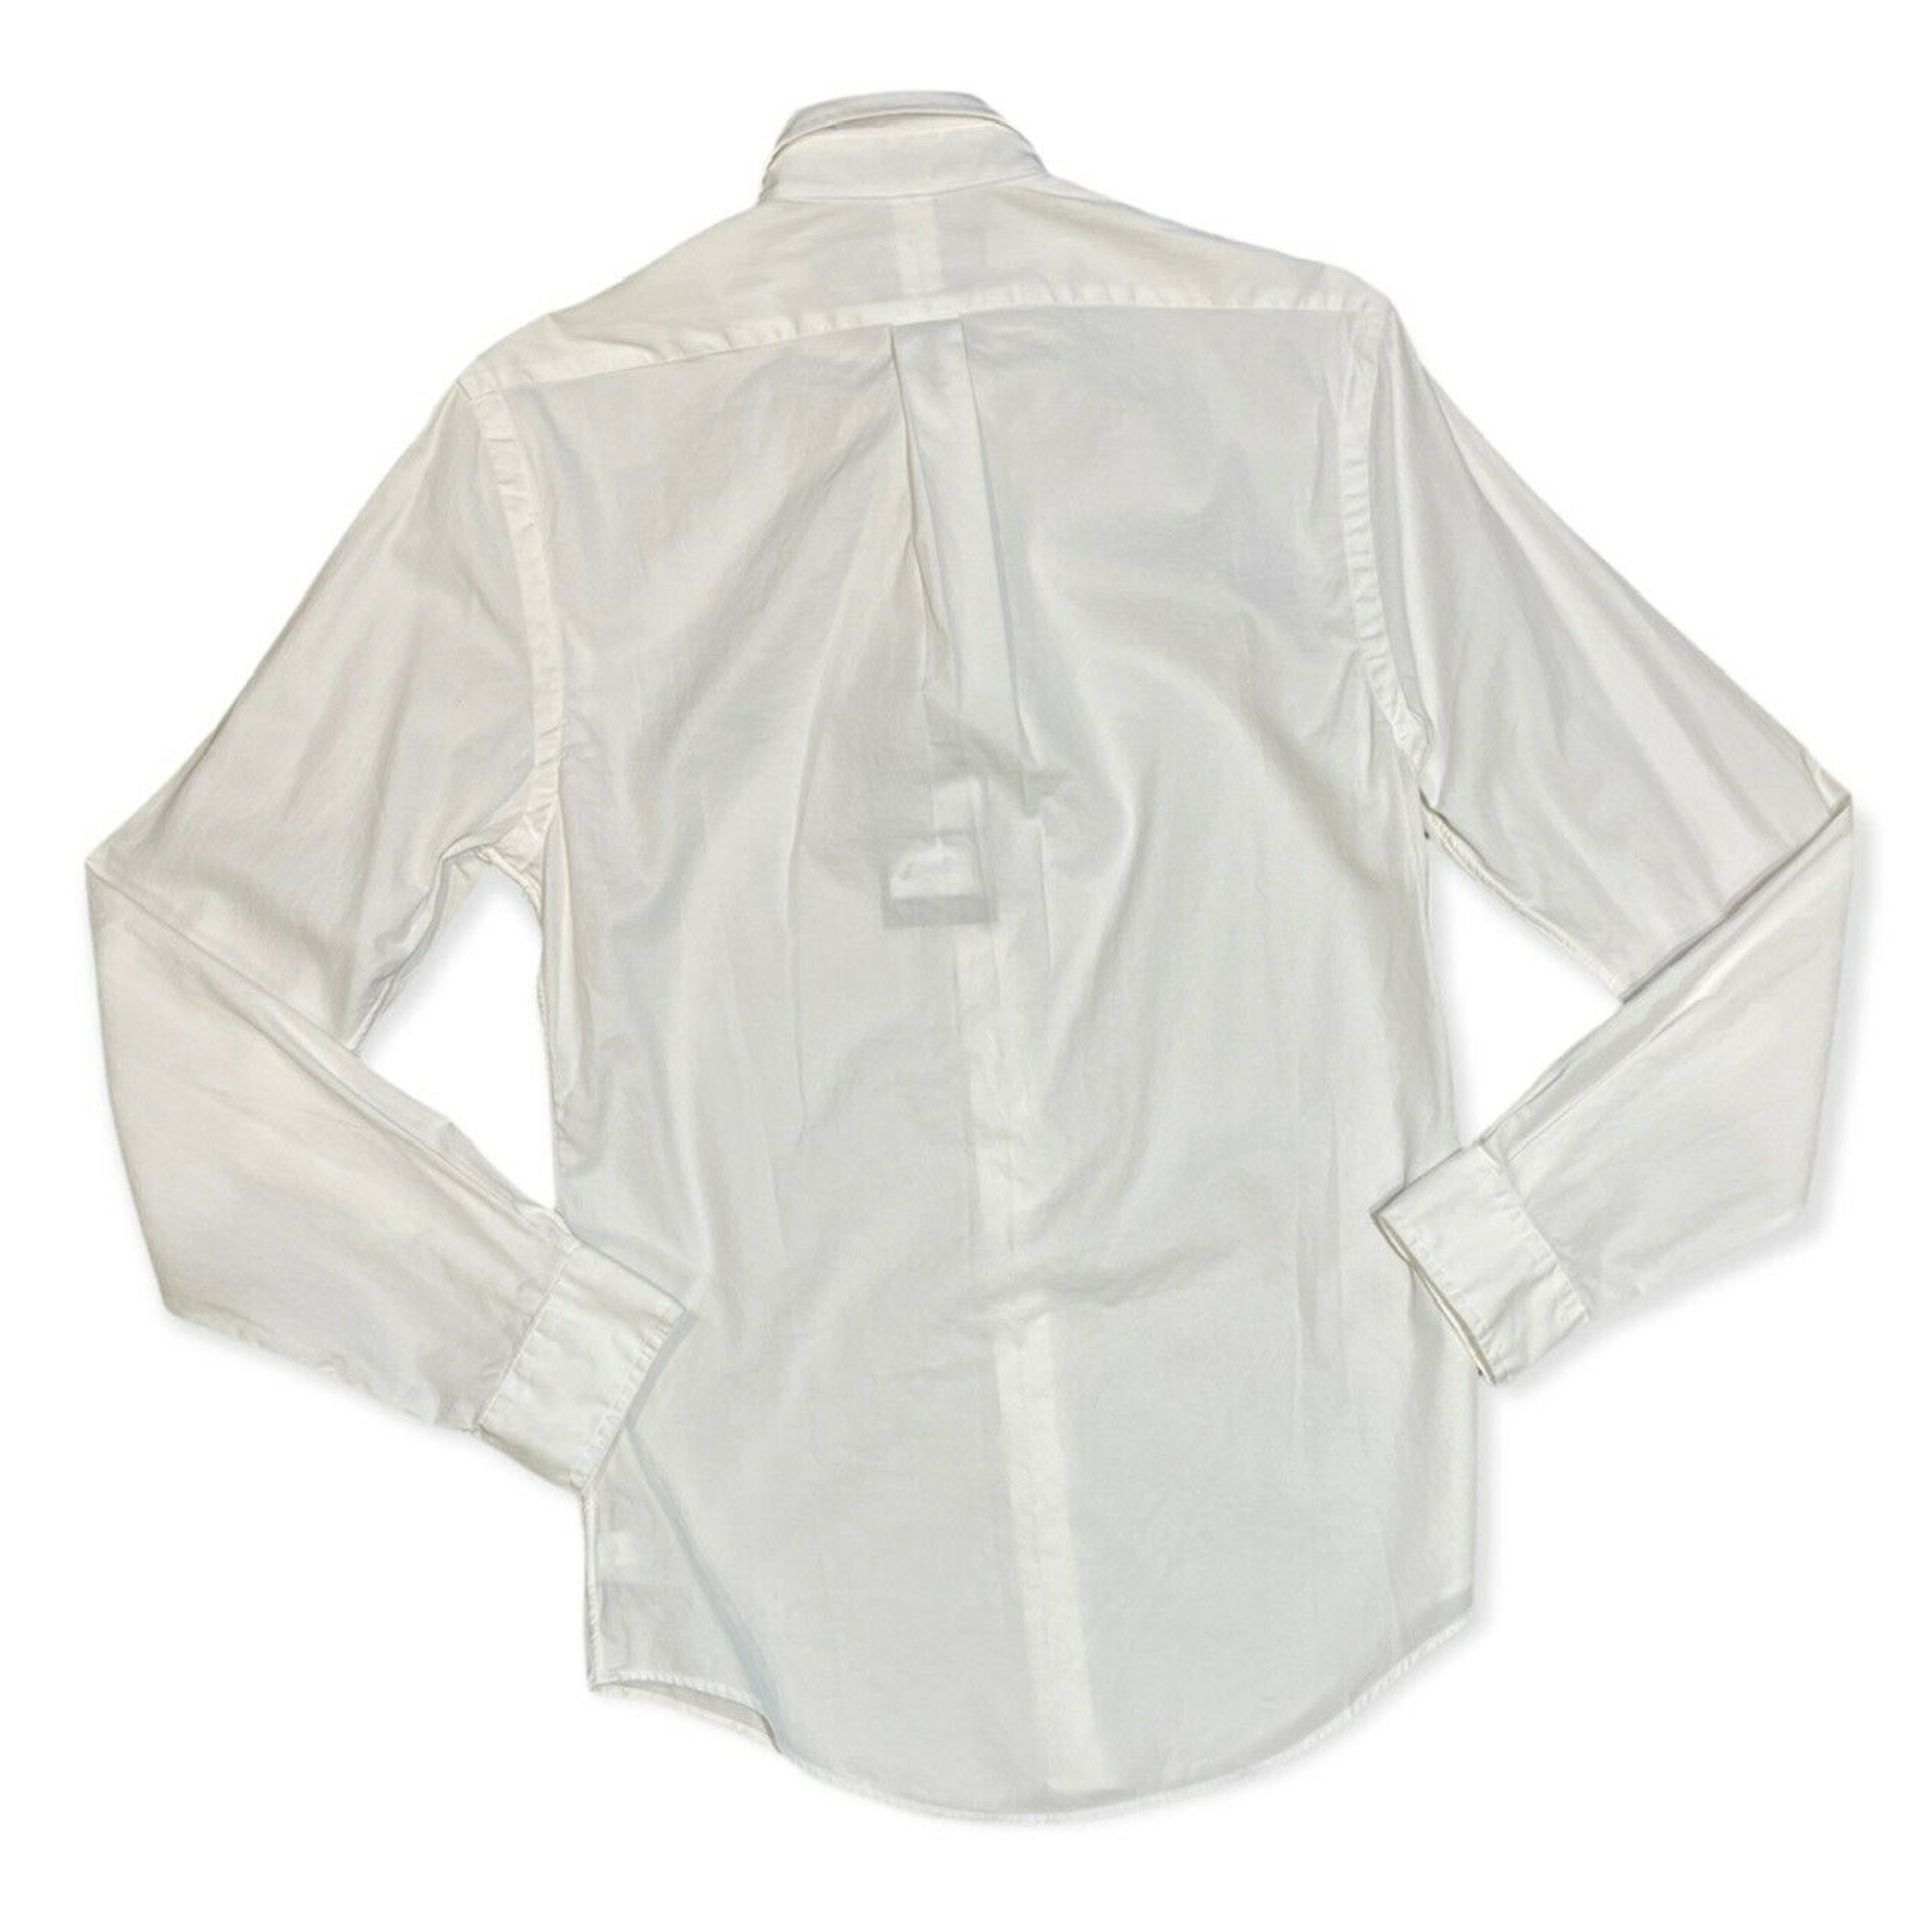 ralph lauren mens white shirt size S RRP £30 - Image 2 of 2